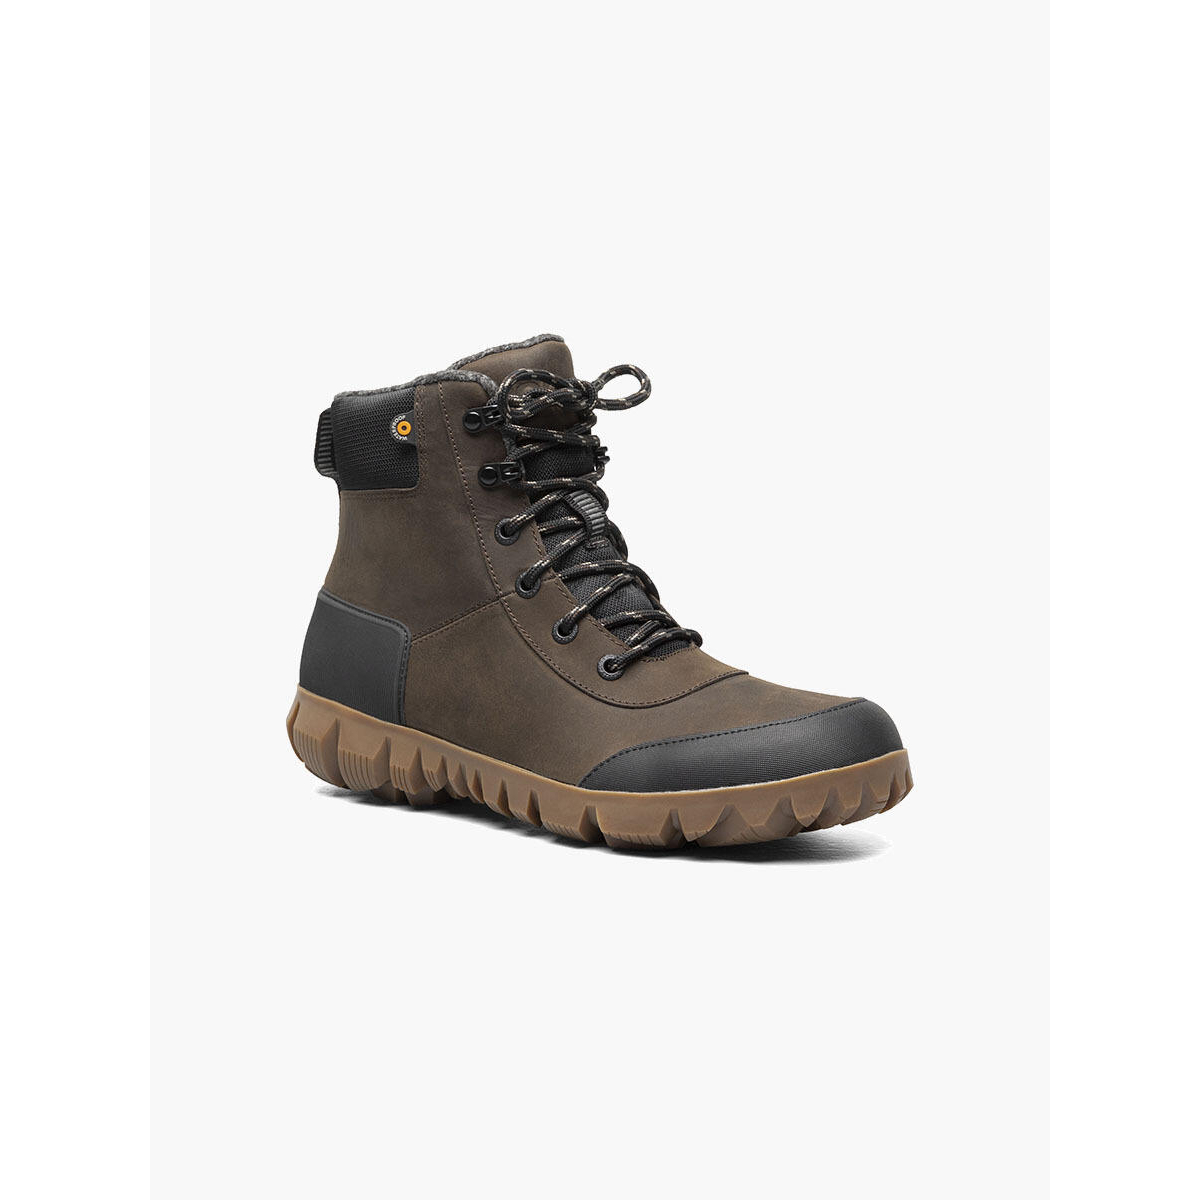 BOGS Men's Arcata Urban Leather Mid Winter Boots Chocolate - 72909-202 CHOCOLATE - CHOCOLATE, 14-M